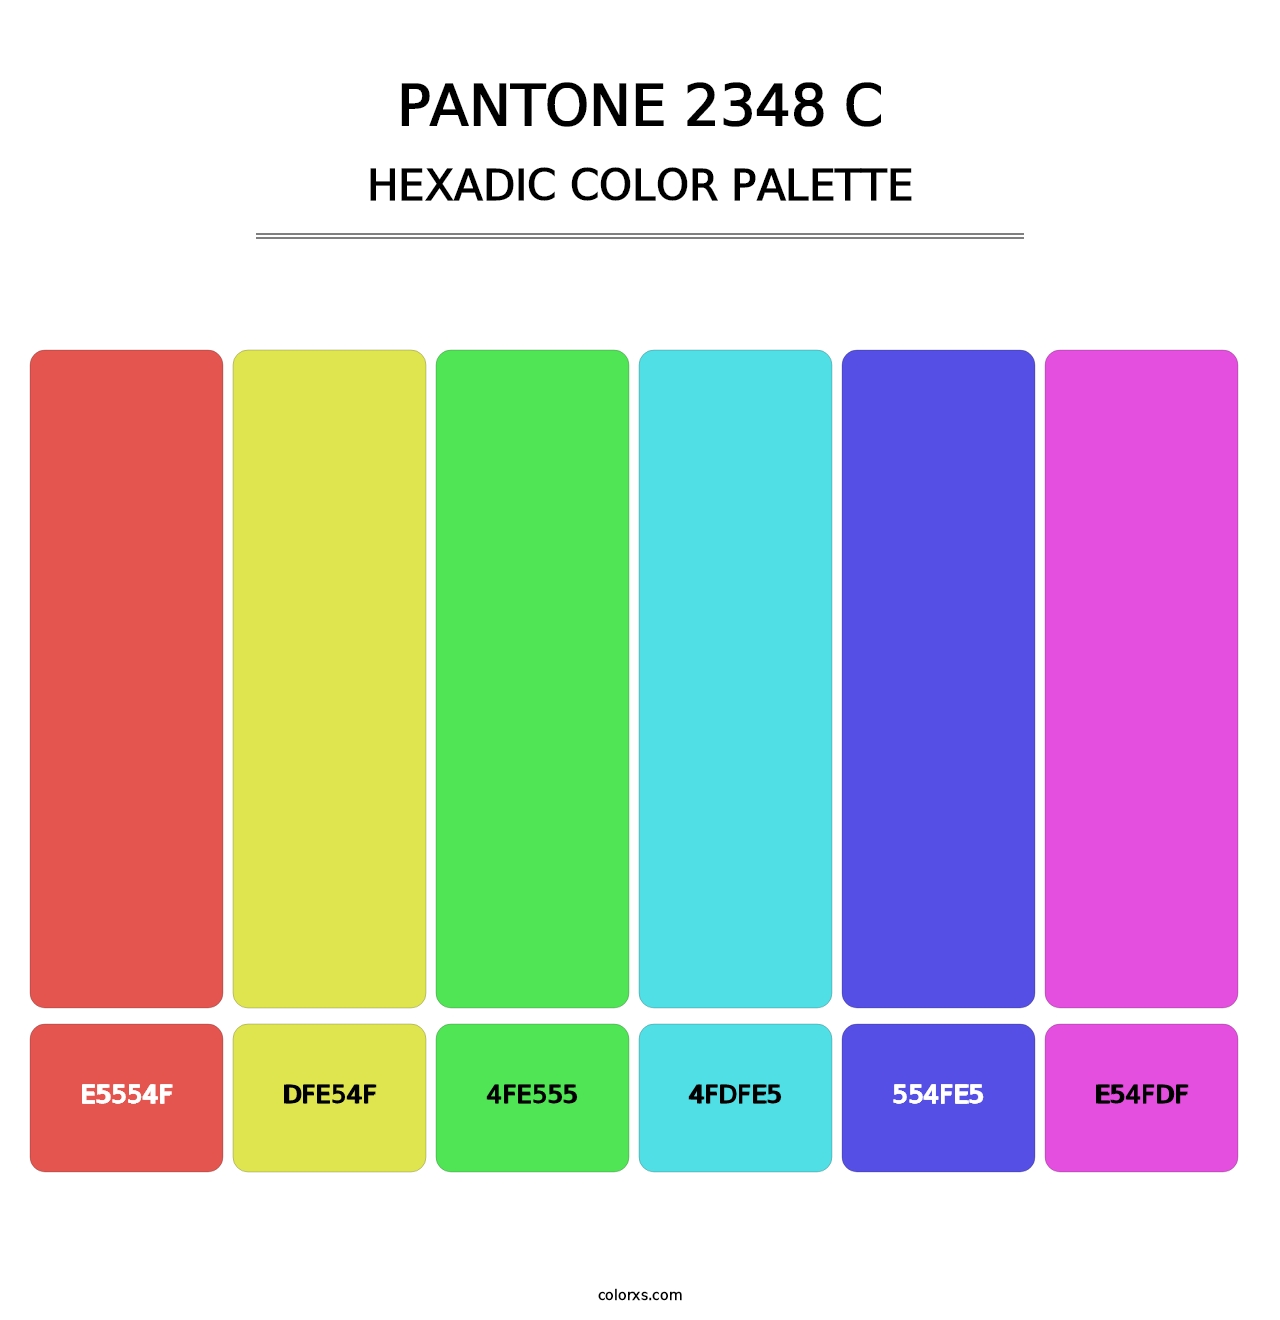 PANTONE 2348 C - Hexadic Color Palette